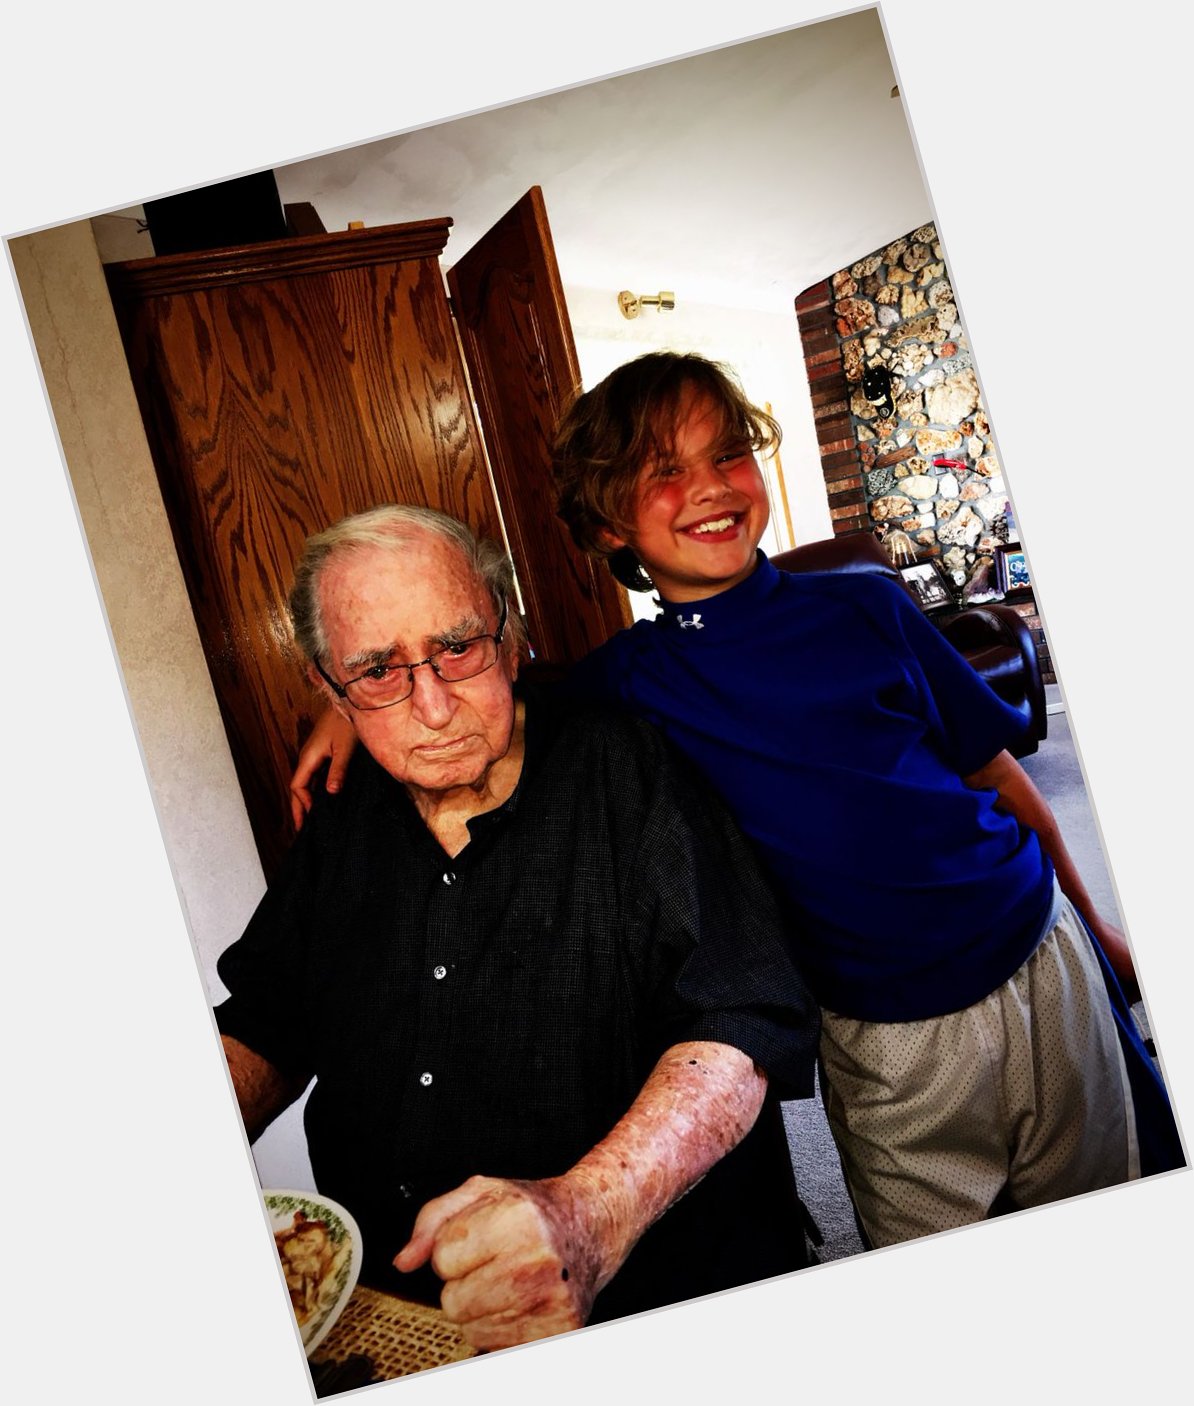 Just 2 Birthday boys enjoying life and livin\ the dream! Happy 94th Birthday Grandpa!!! 